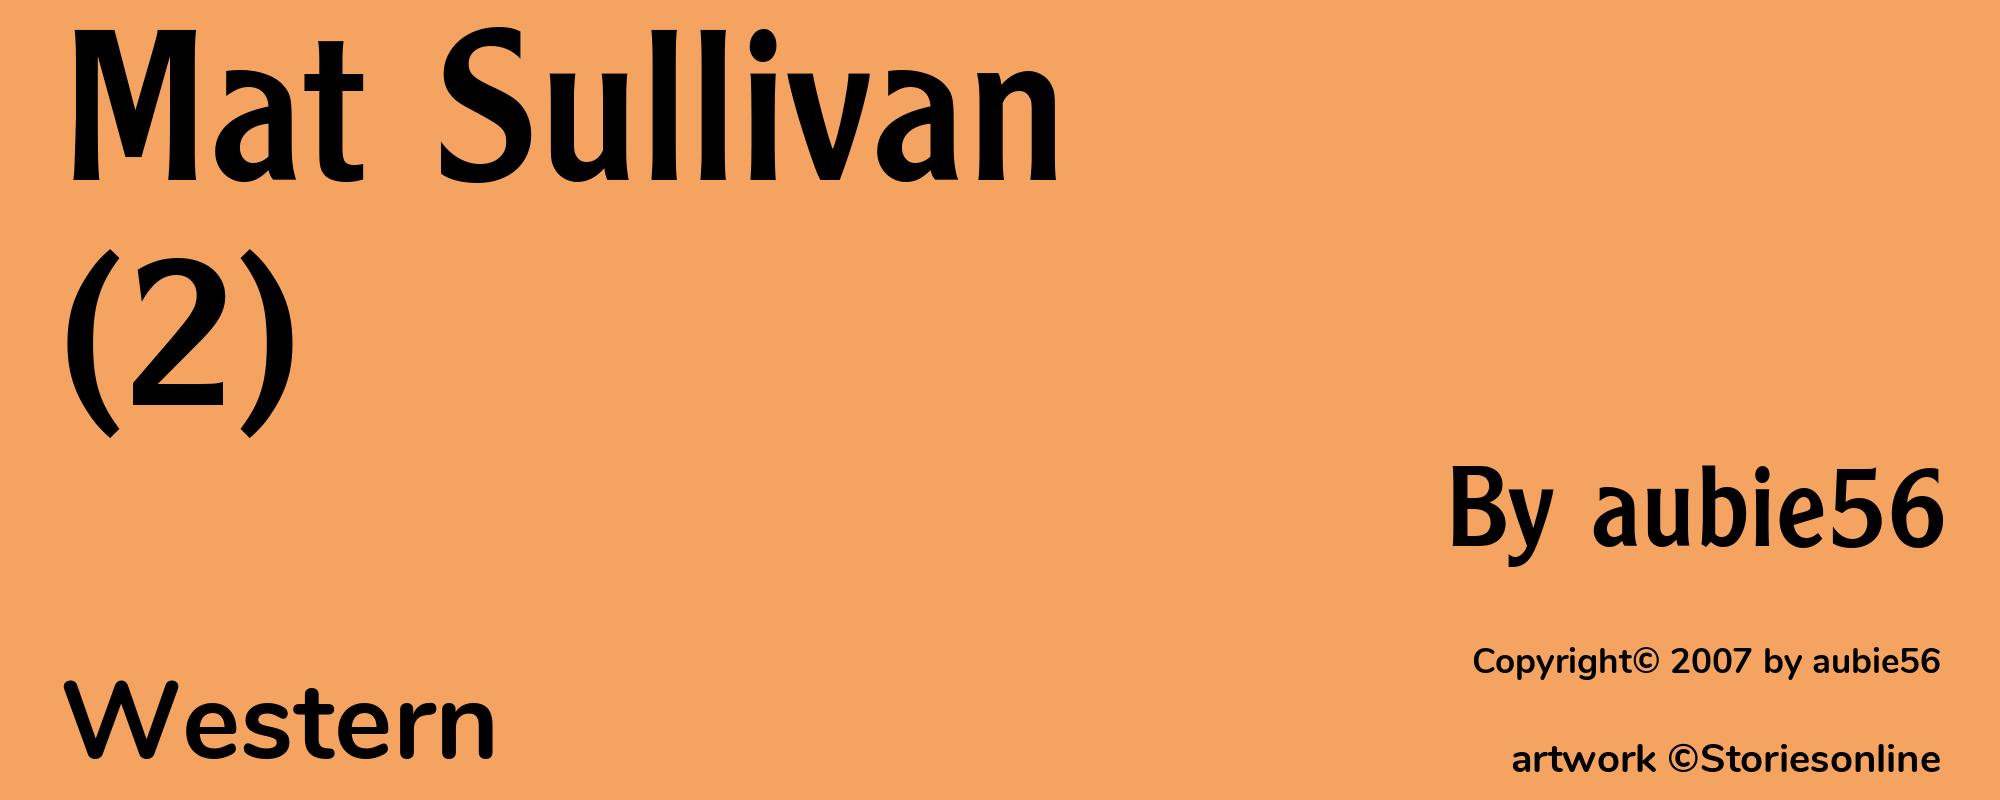 Mat Sullivan(2) - Cover